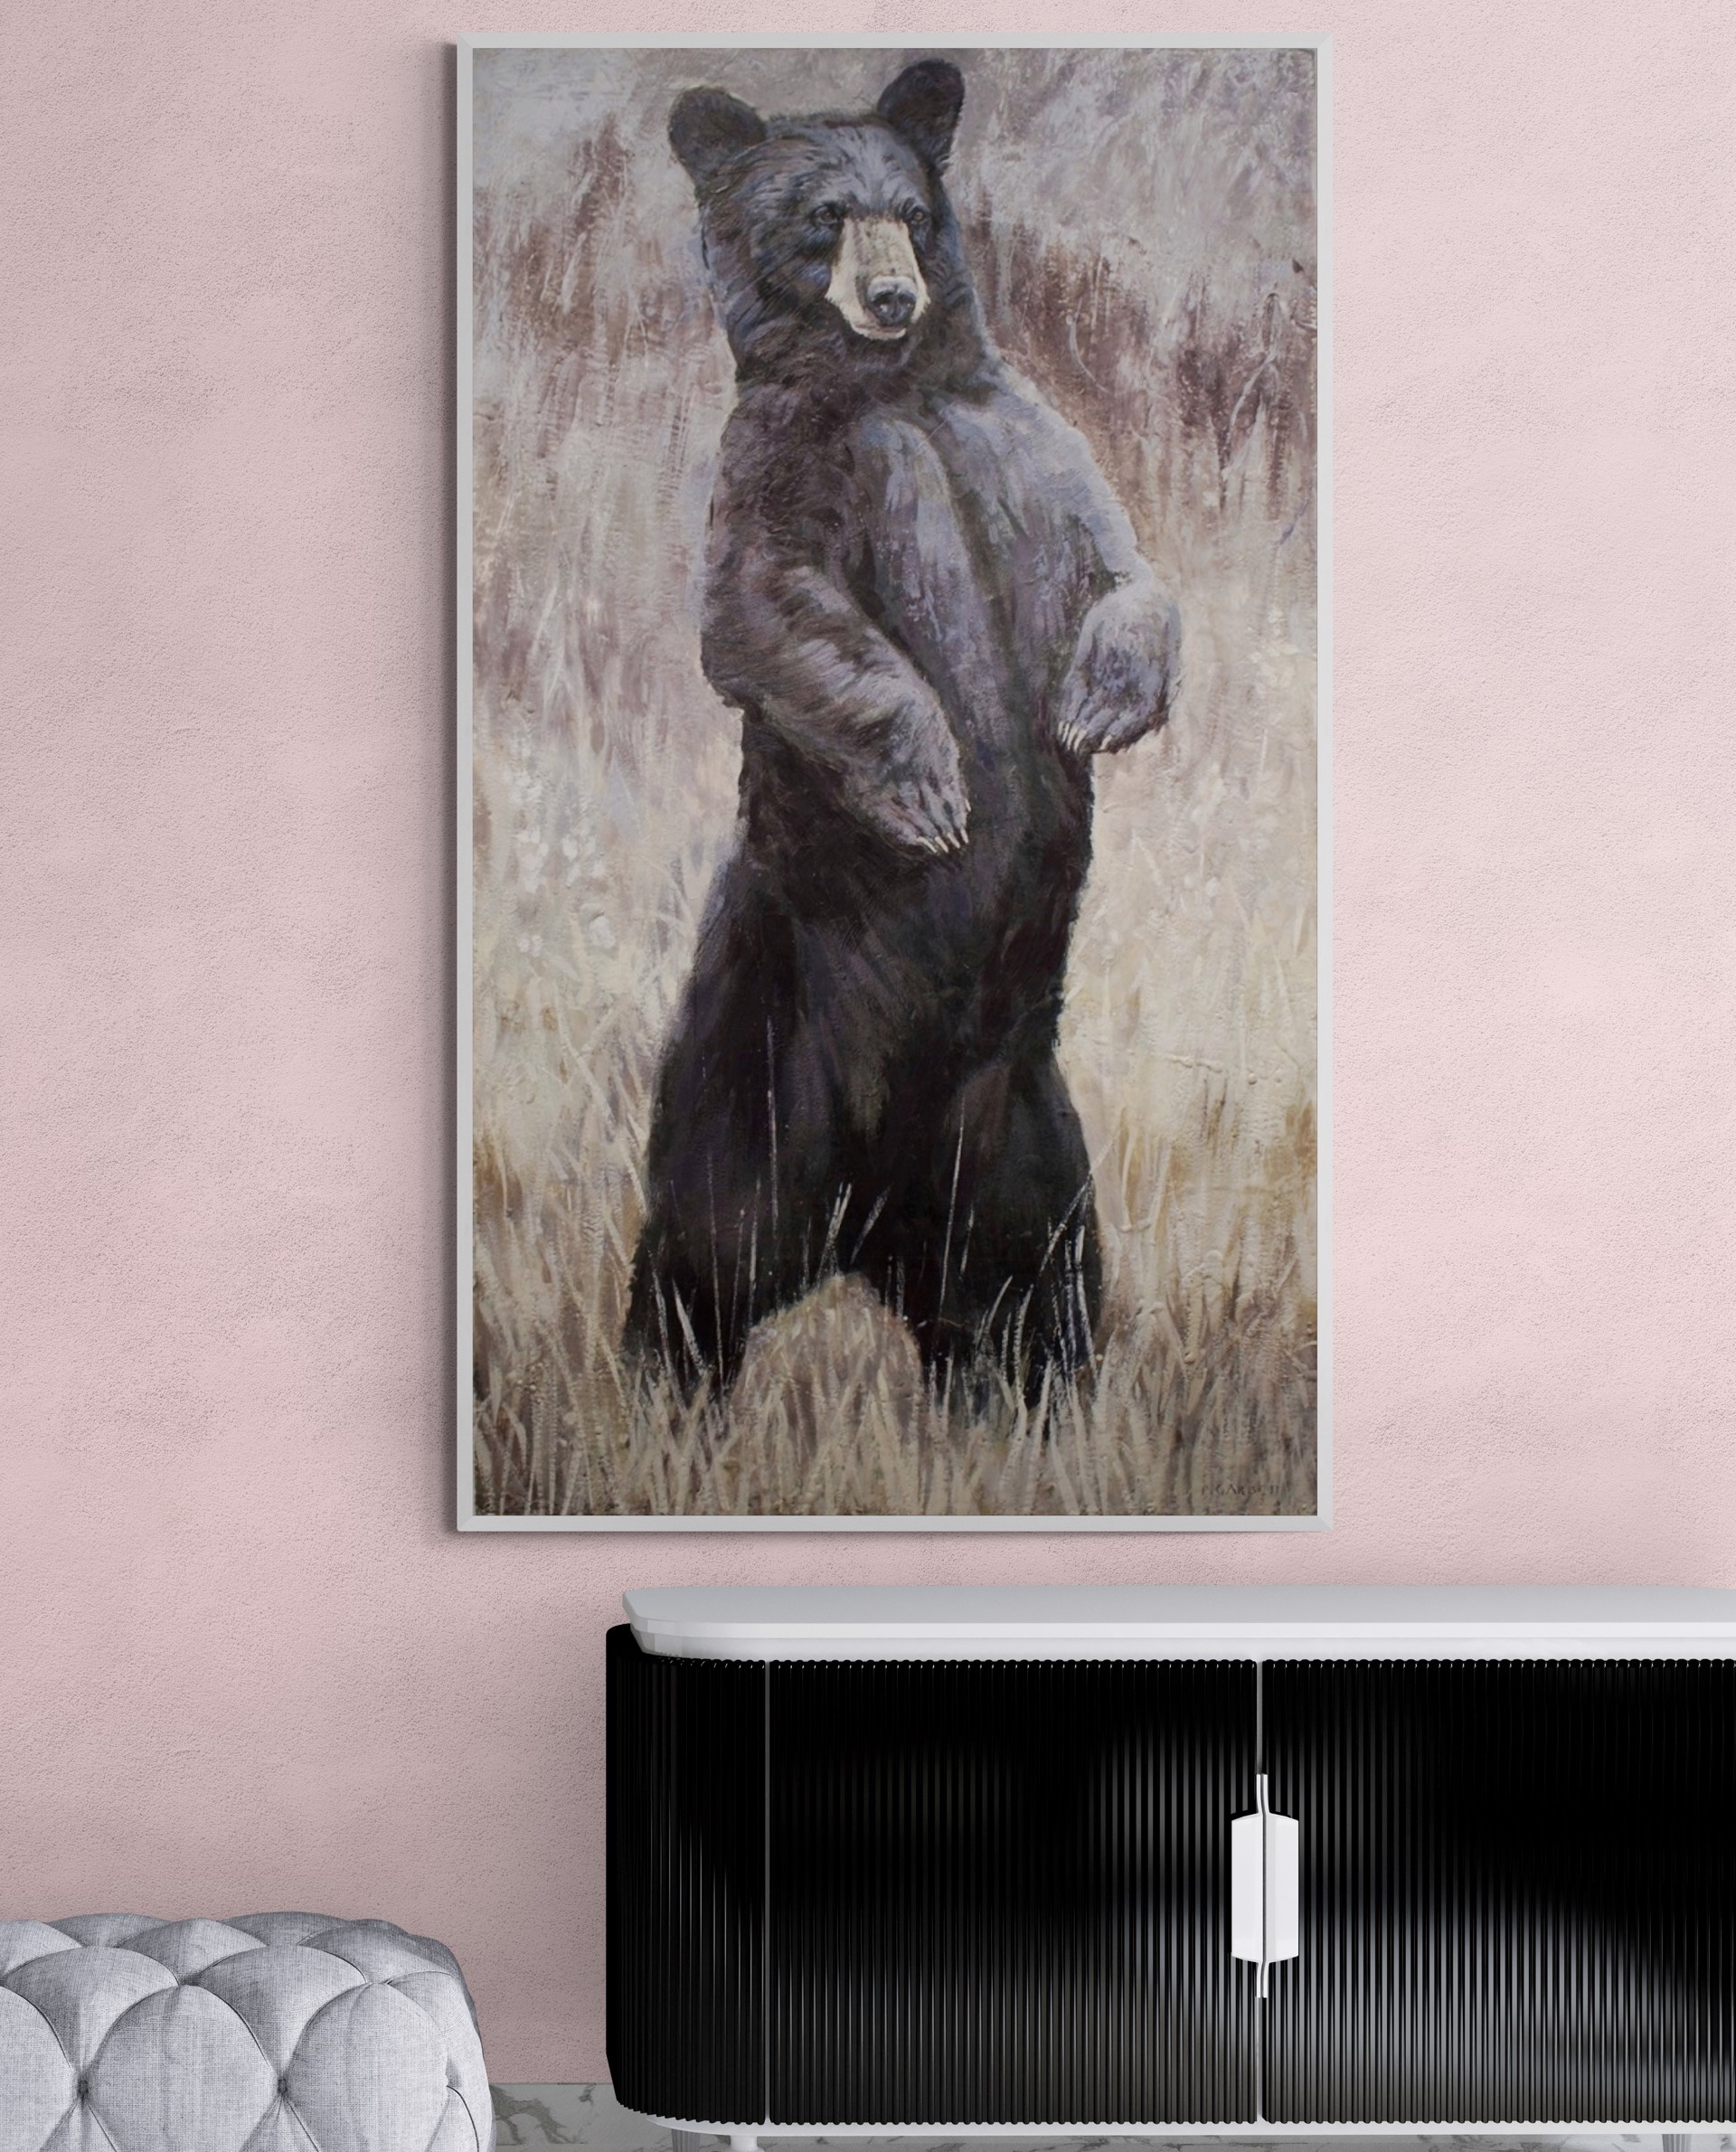 Standing Bear by Paul Garbett